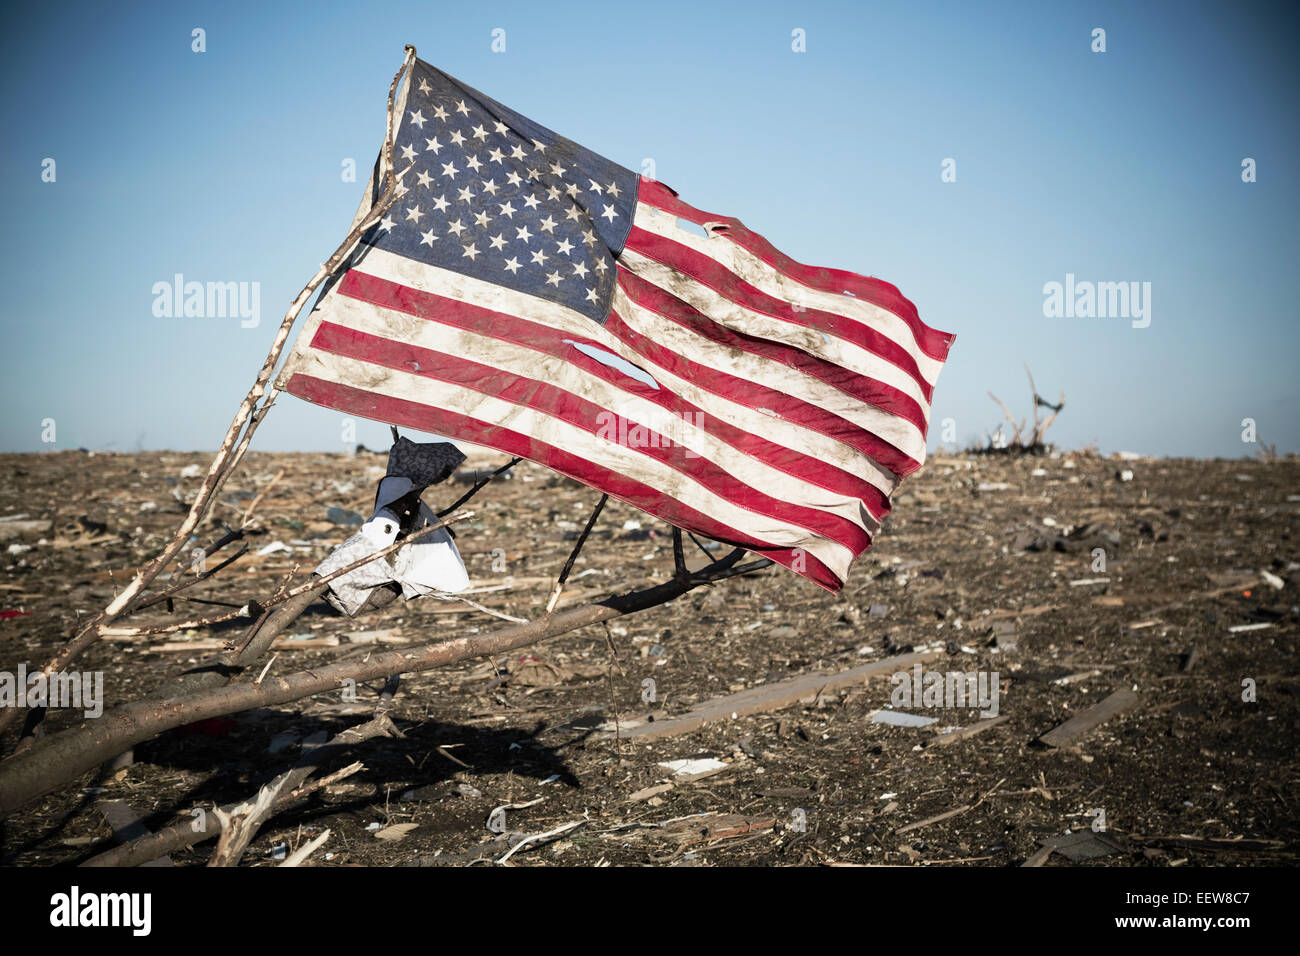 American flag in debris after tornado Stock Photo